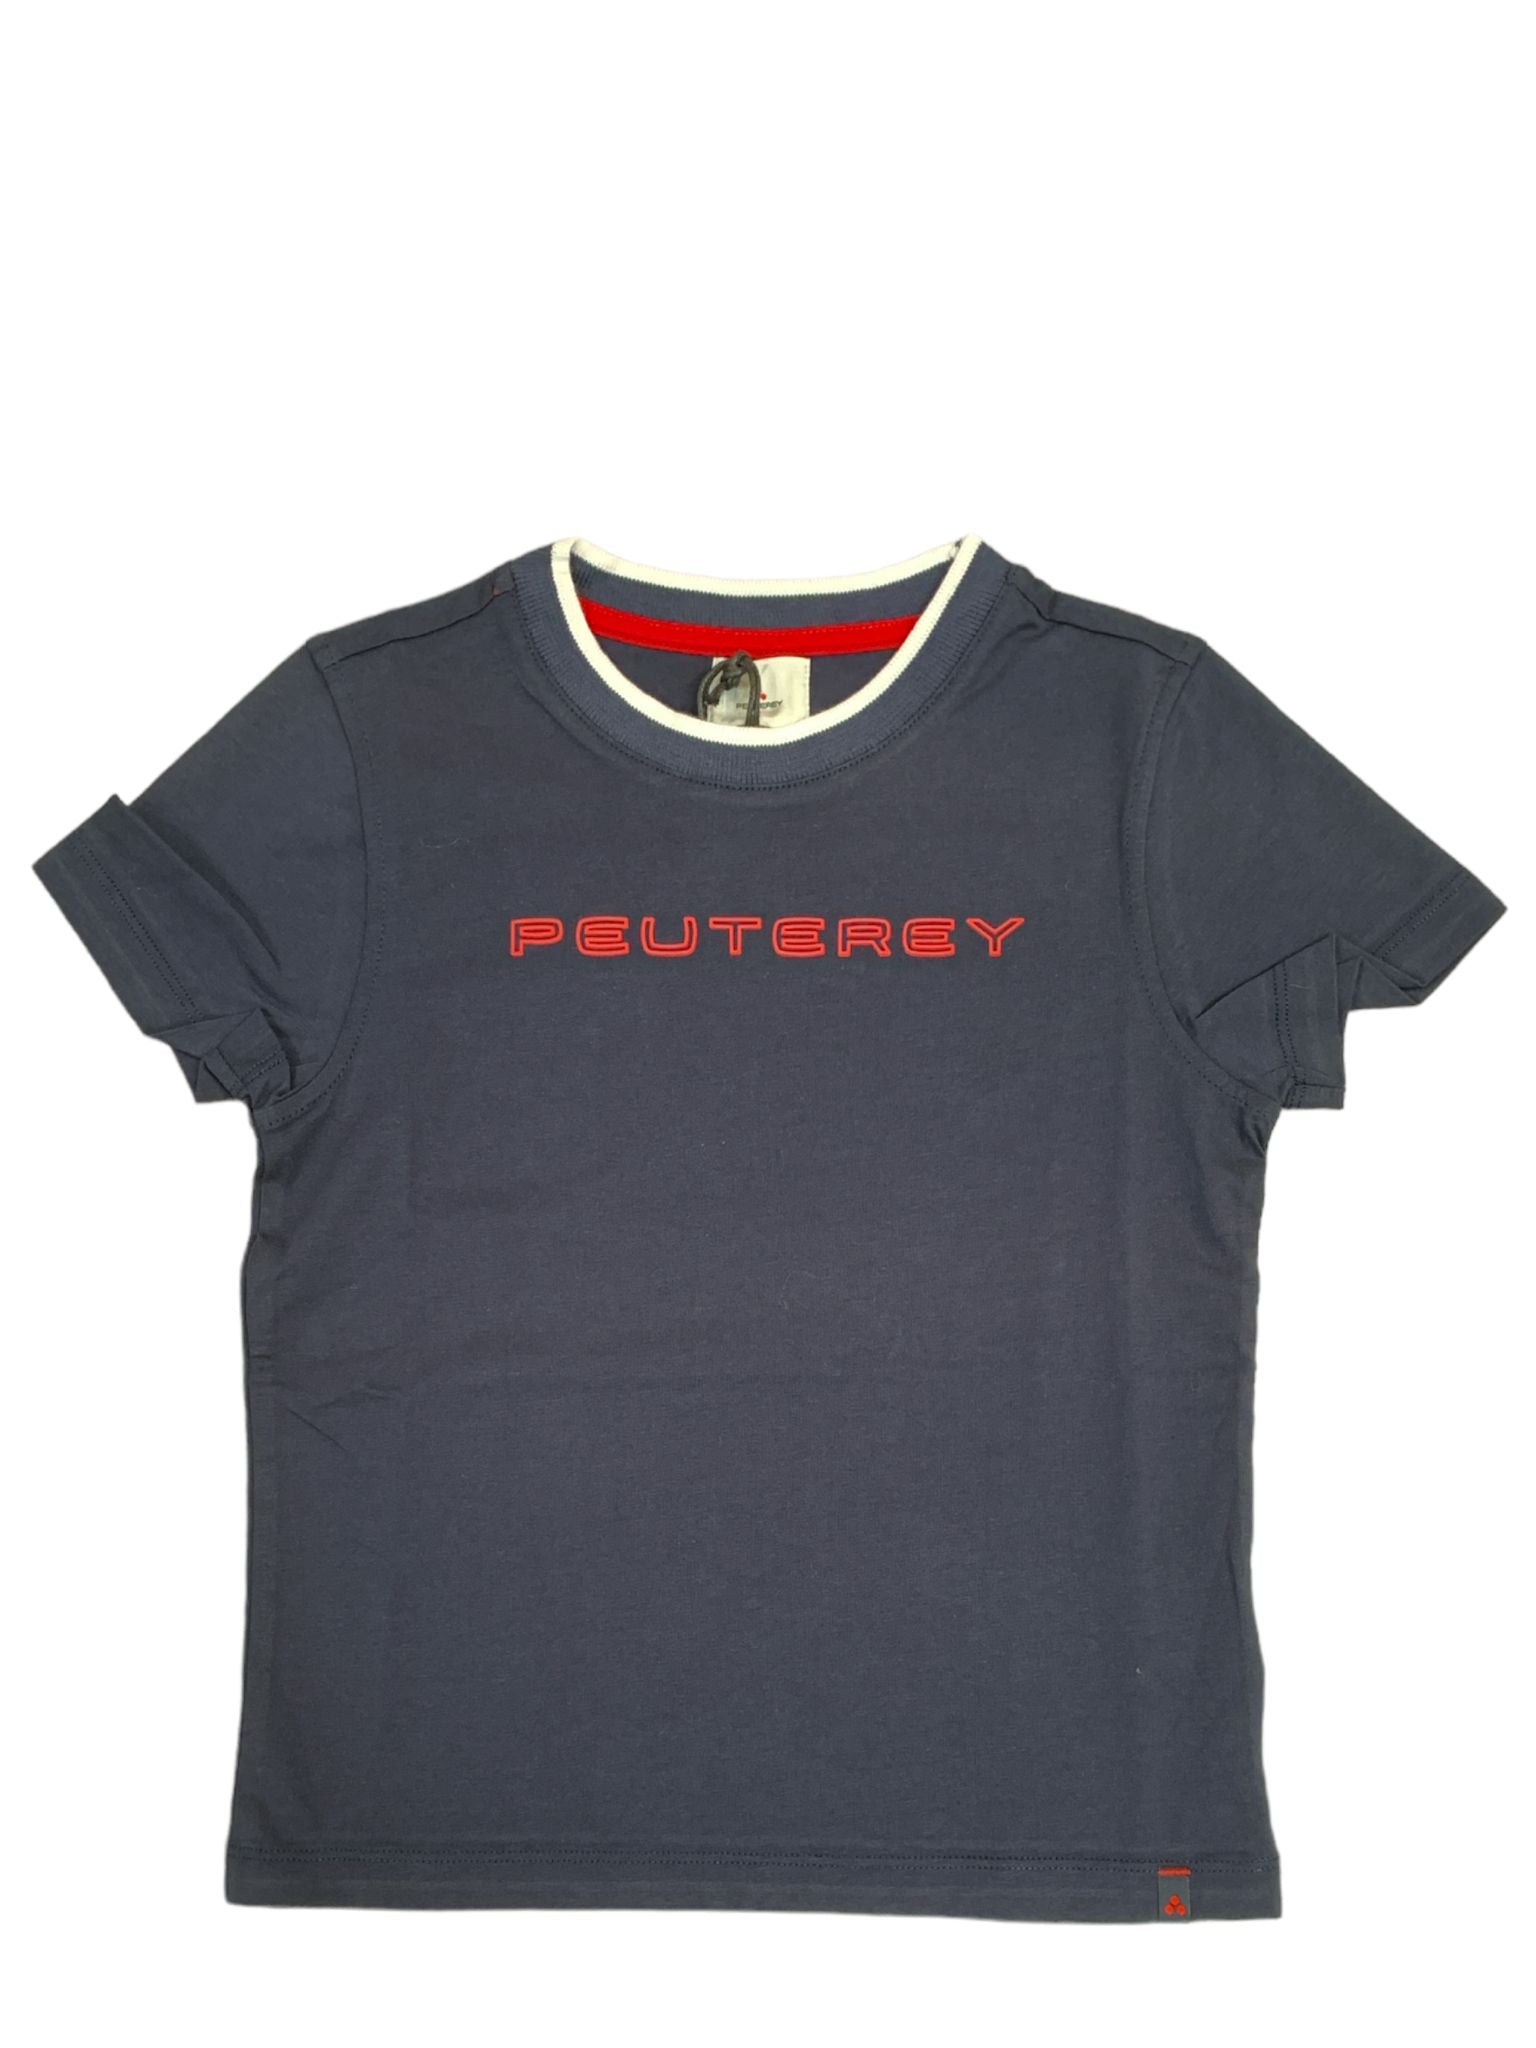 Peuterey t-shirt